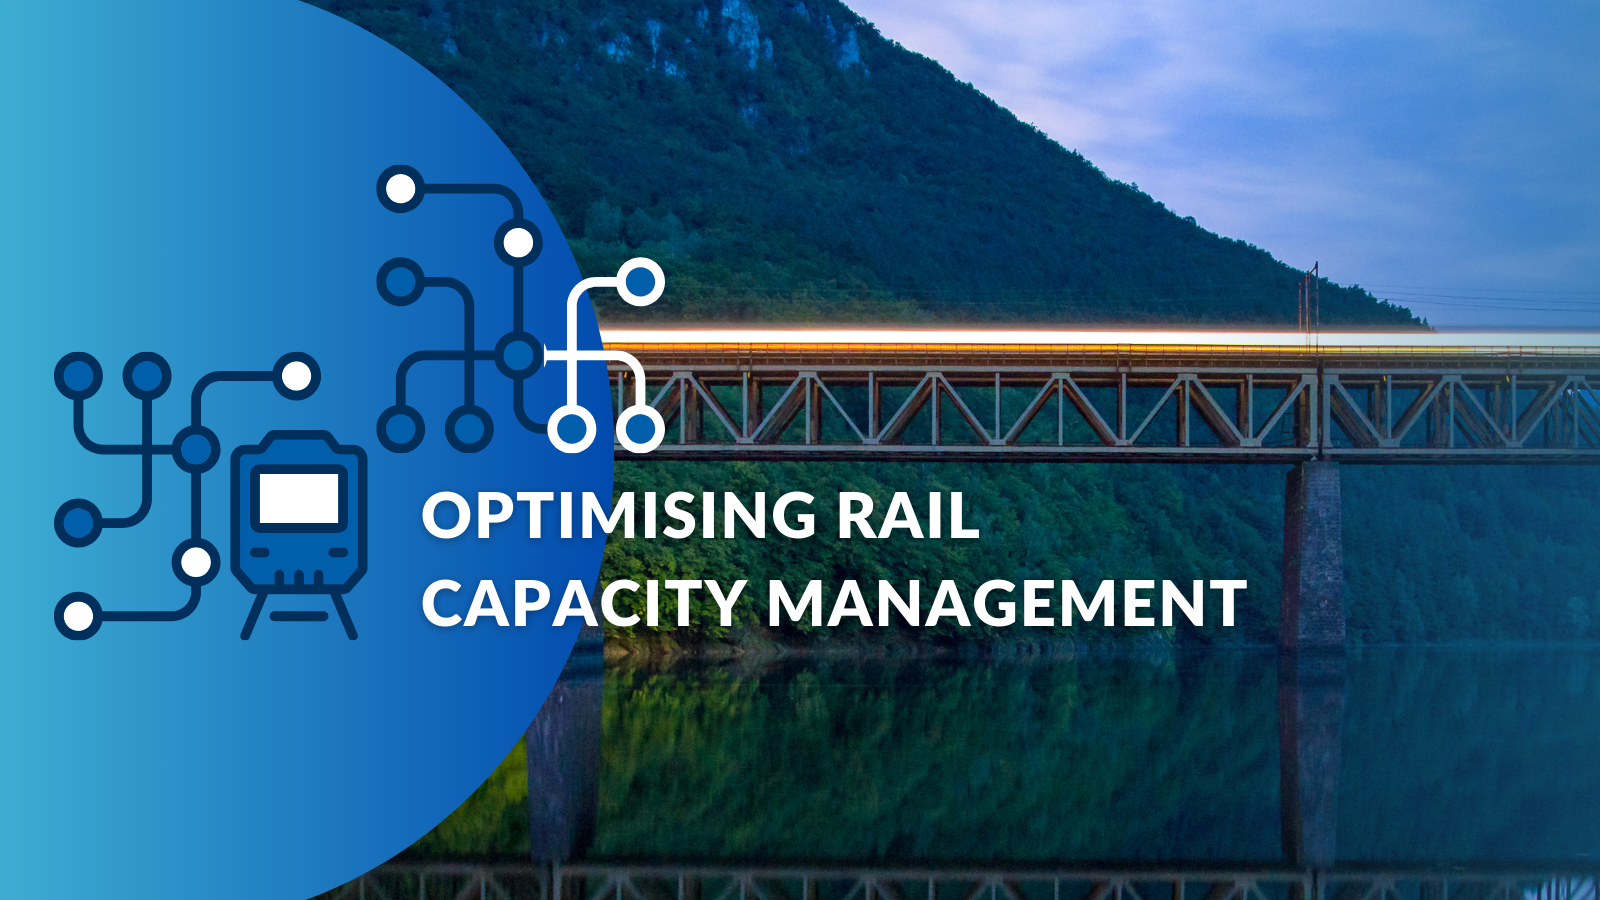 Optimising rail capacity management